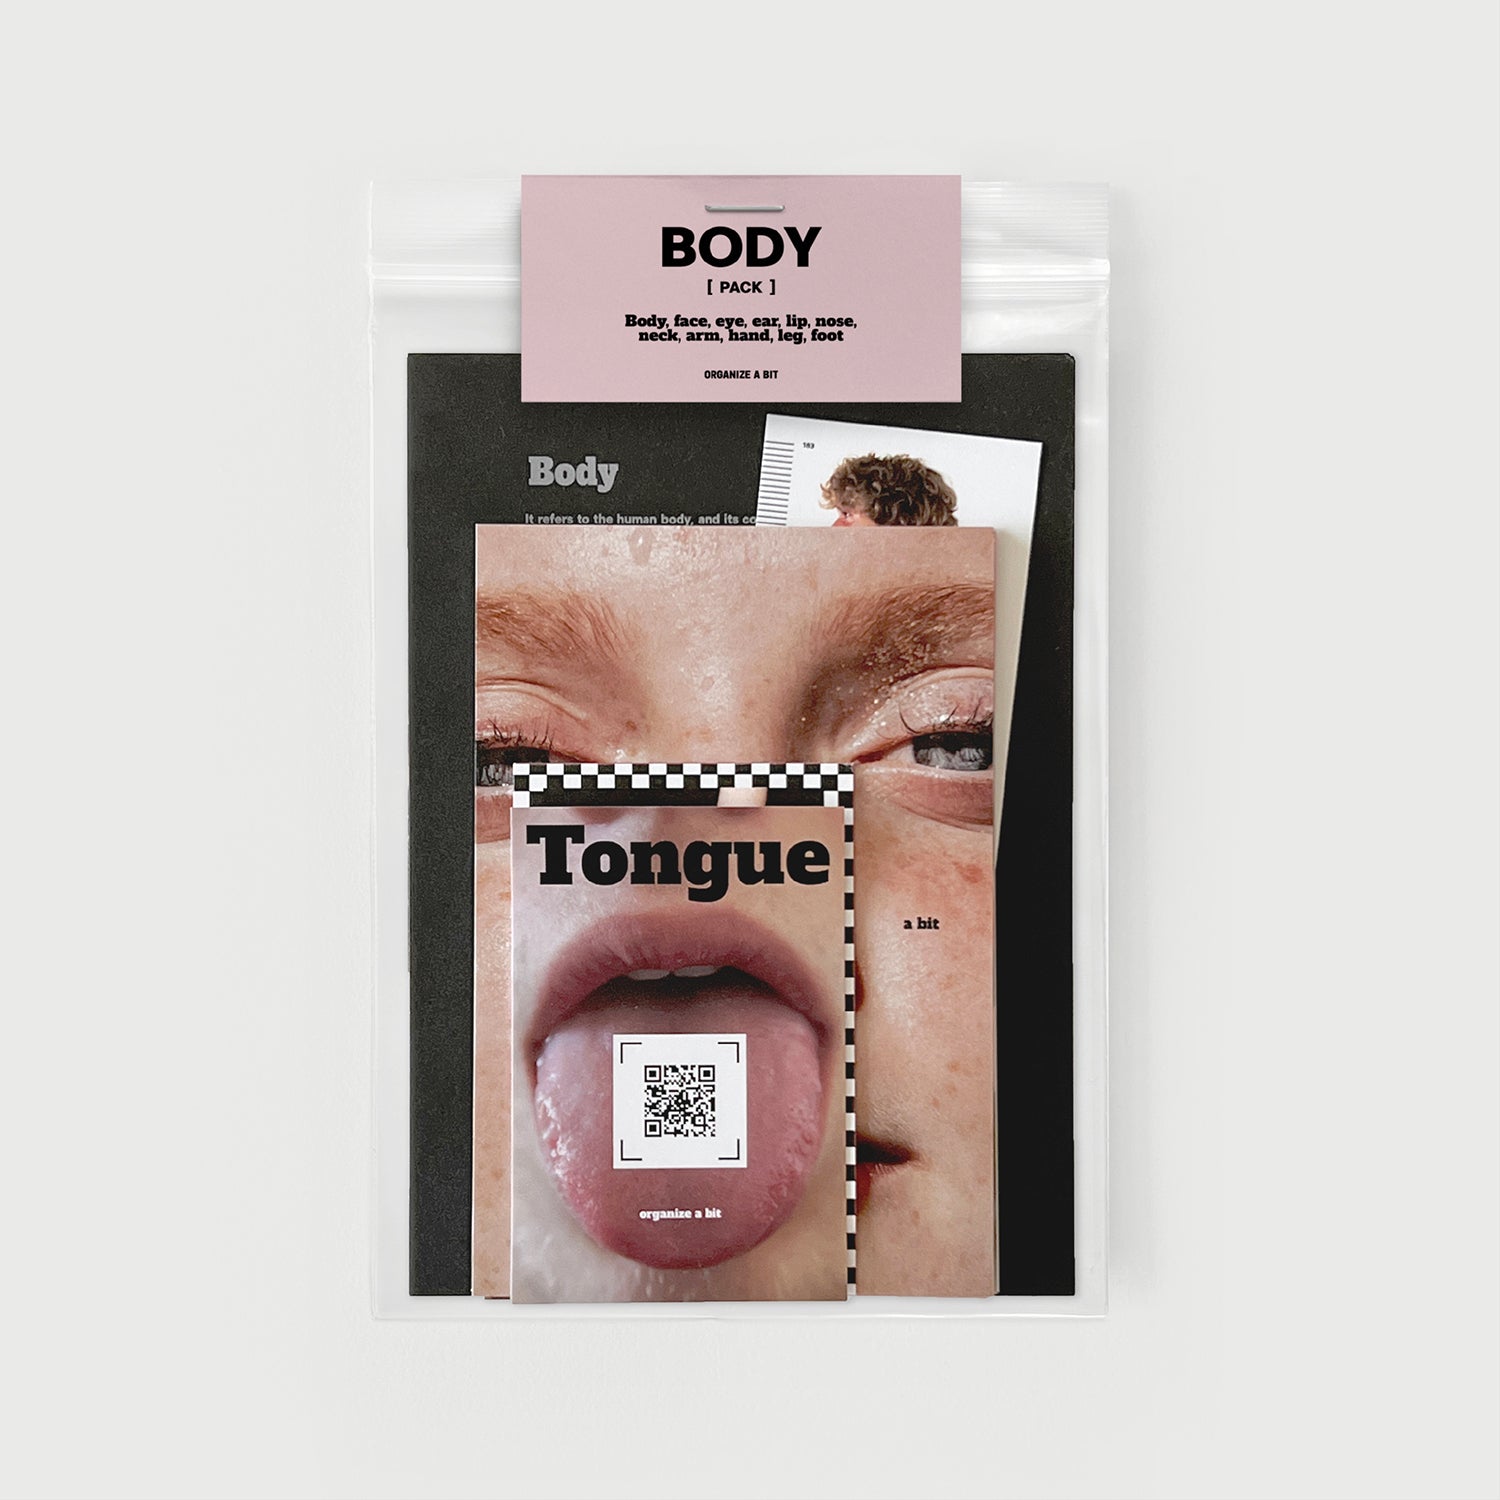 oab body pack / scrap sticker set